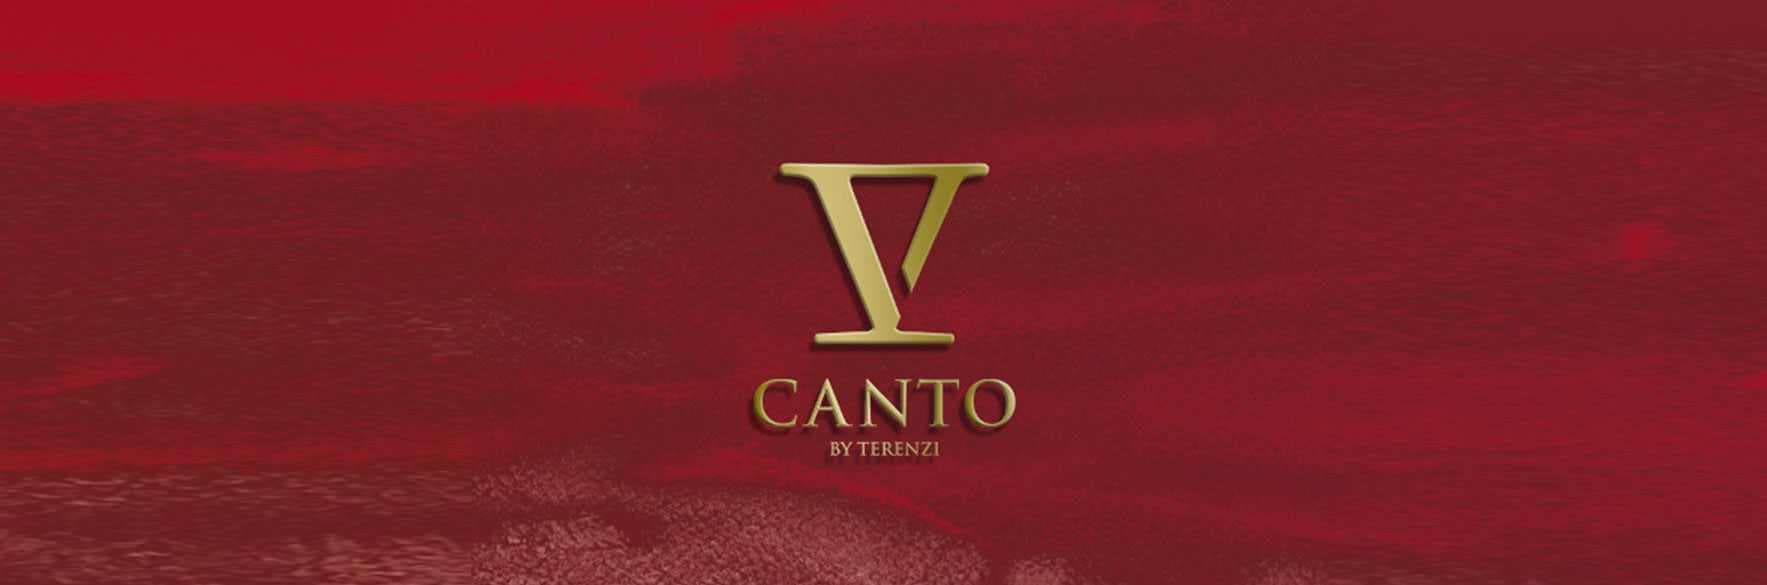 خرید عطر وی کانتو اصل V CANTO ایتالیایی